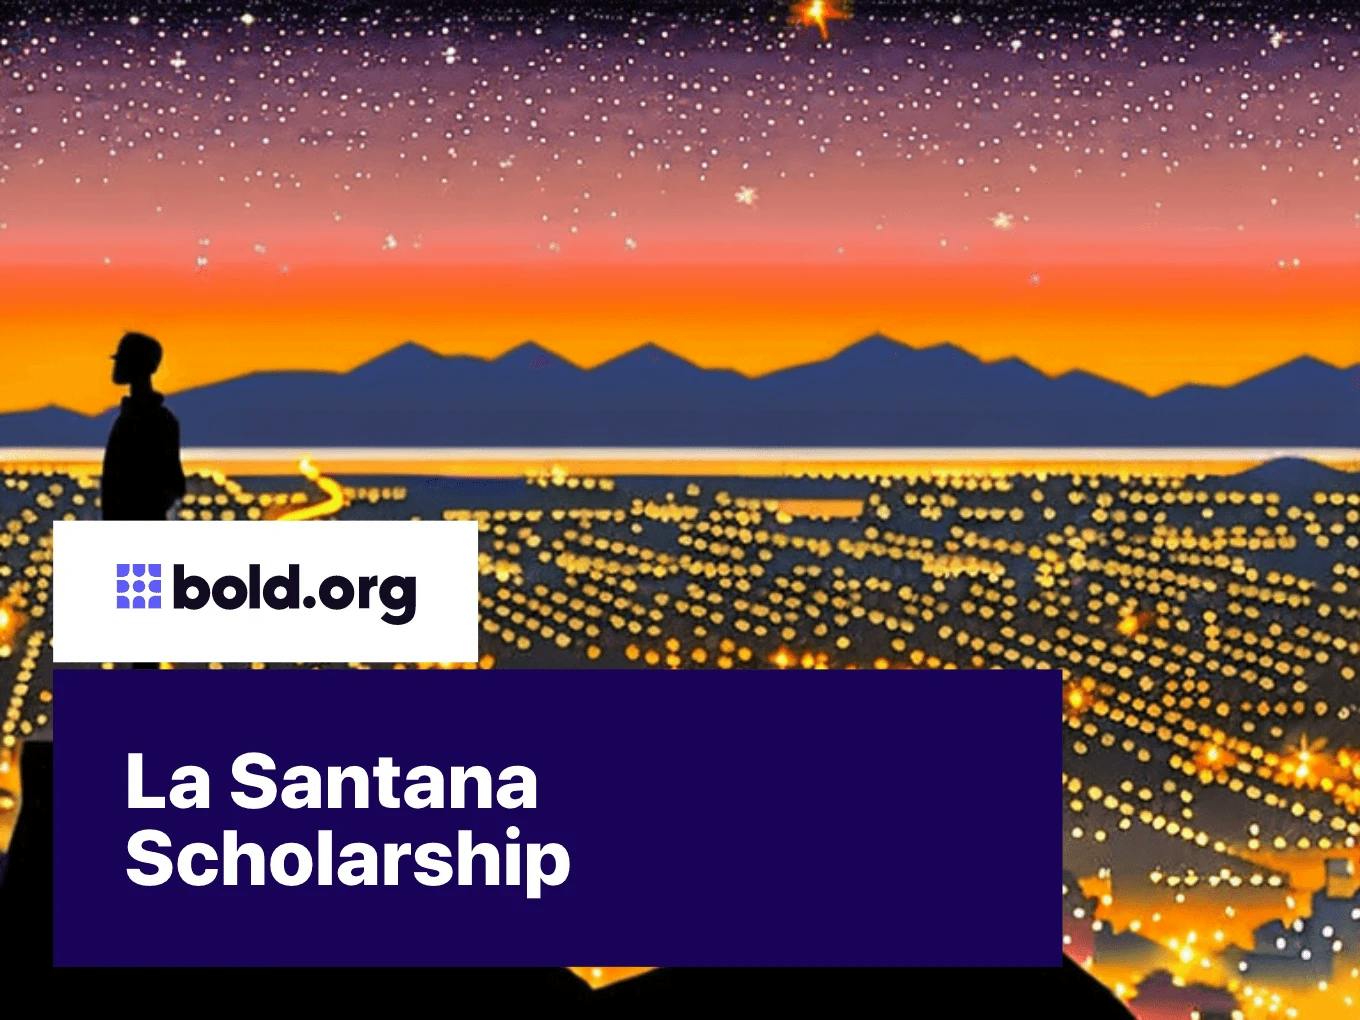 La Santana Scholarship